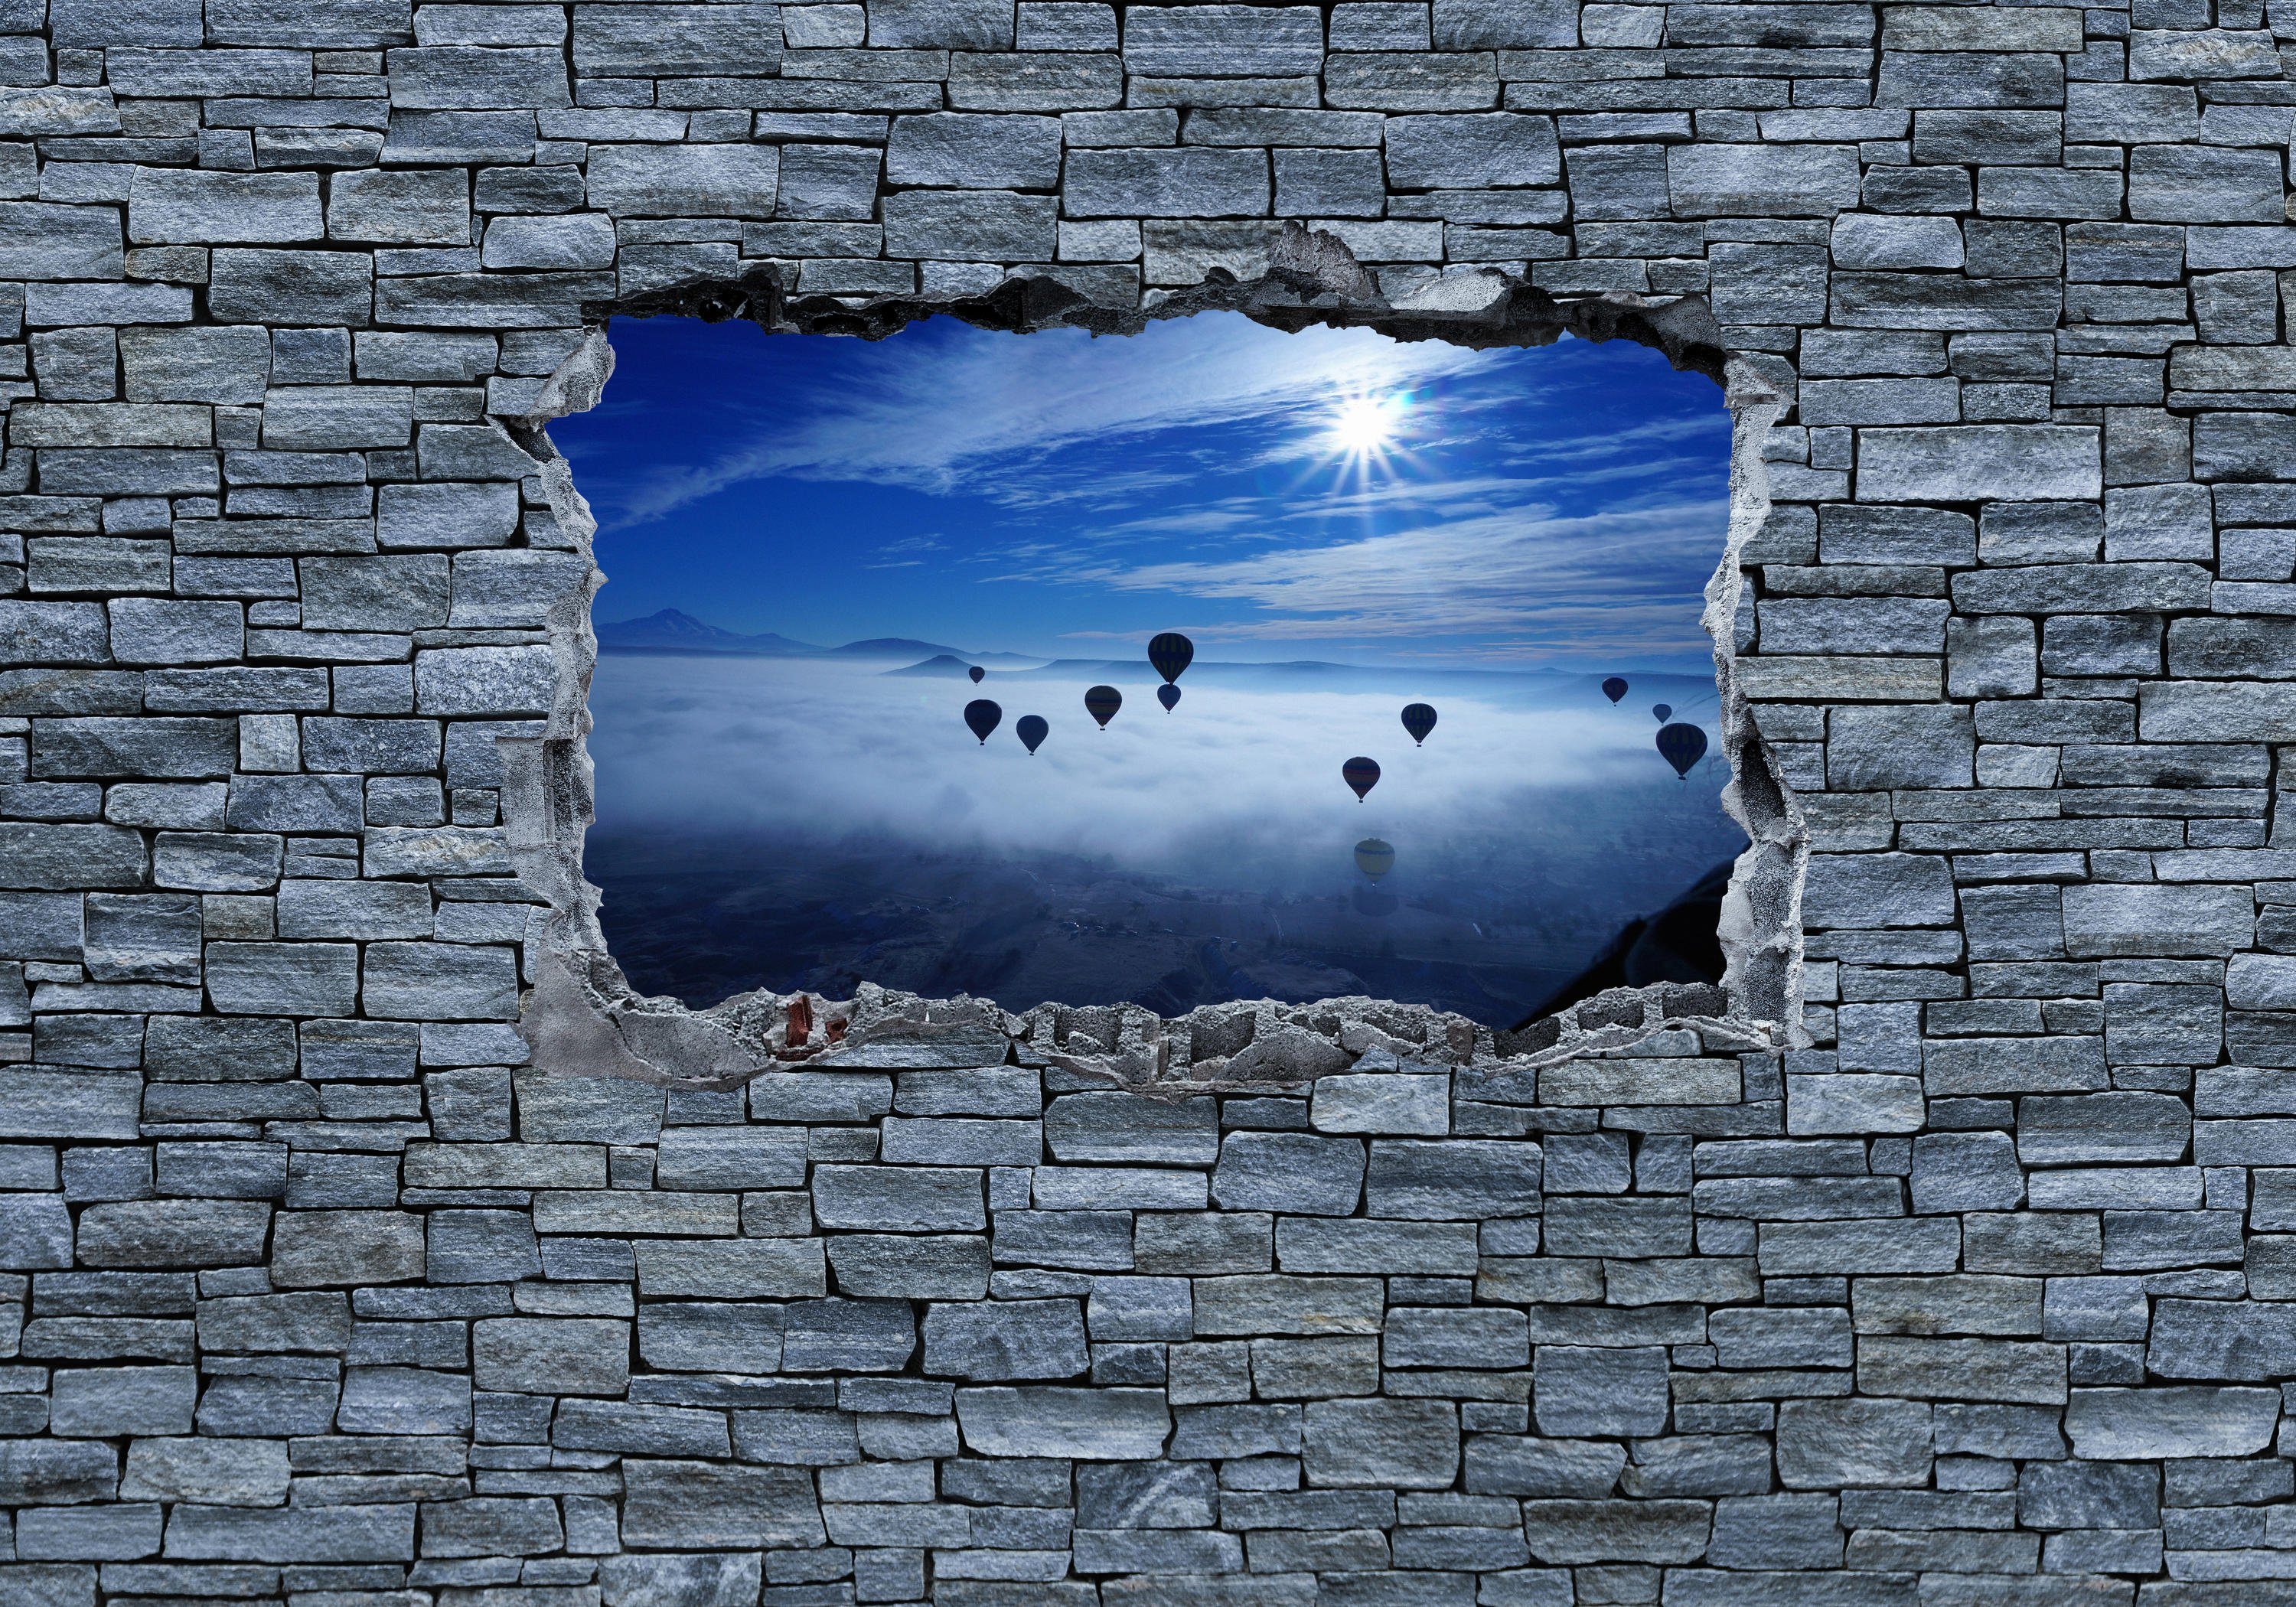 wandmotiv24 Fototapete 3D Luftballon Turkei - grobe Steinmauer, glatt, Wandtapete, Motivtapete, matt, Vliestapete